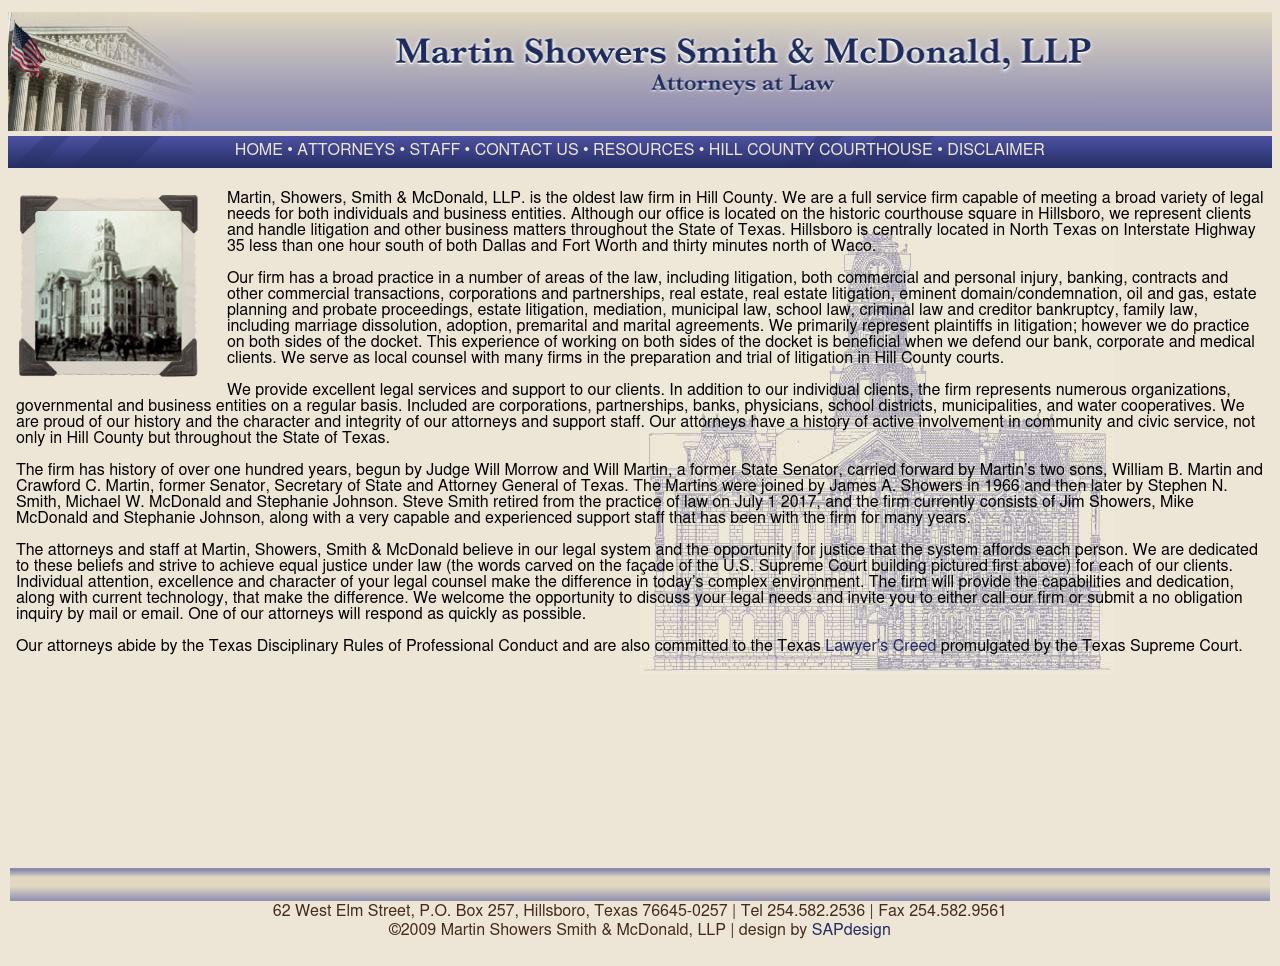 Martin, Showers, Smith & McDonald LLP - Hillsboro TX Lawyers